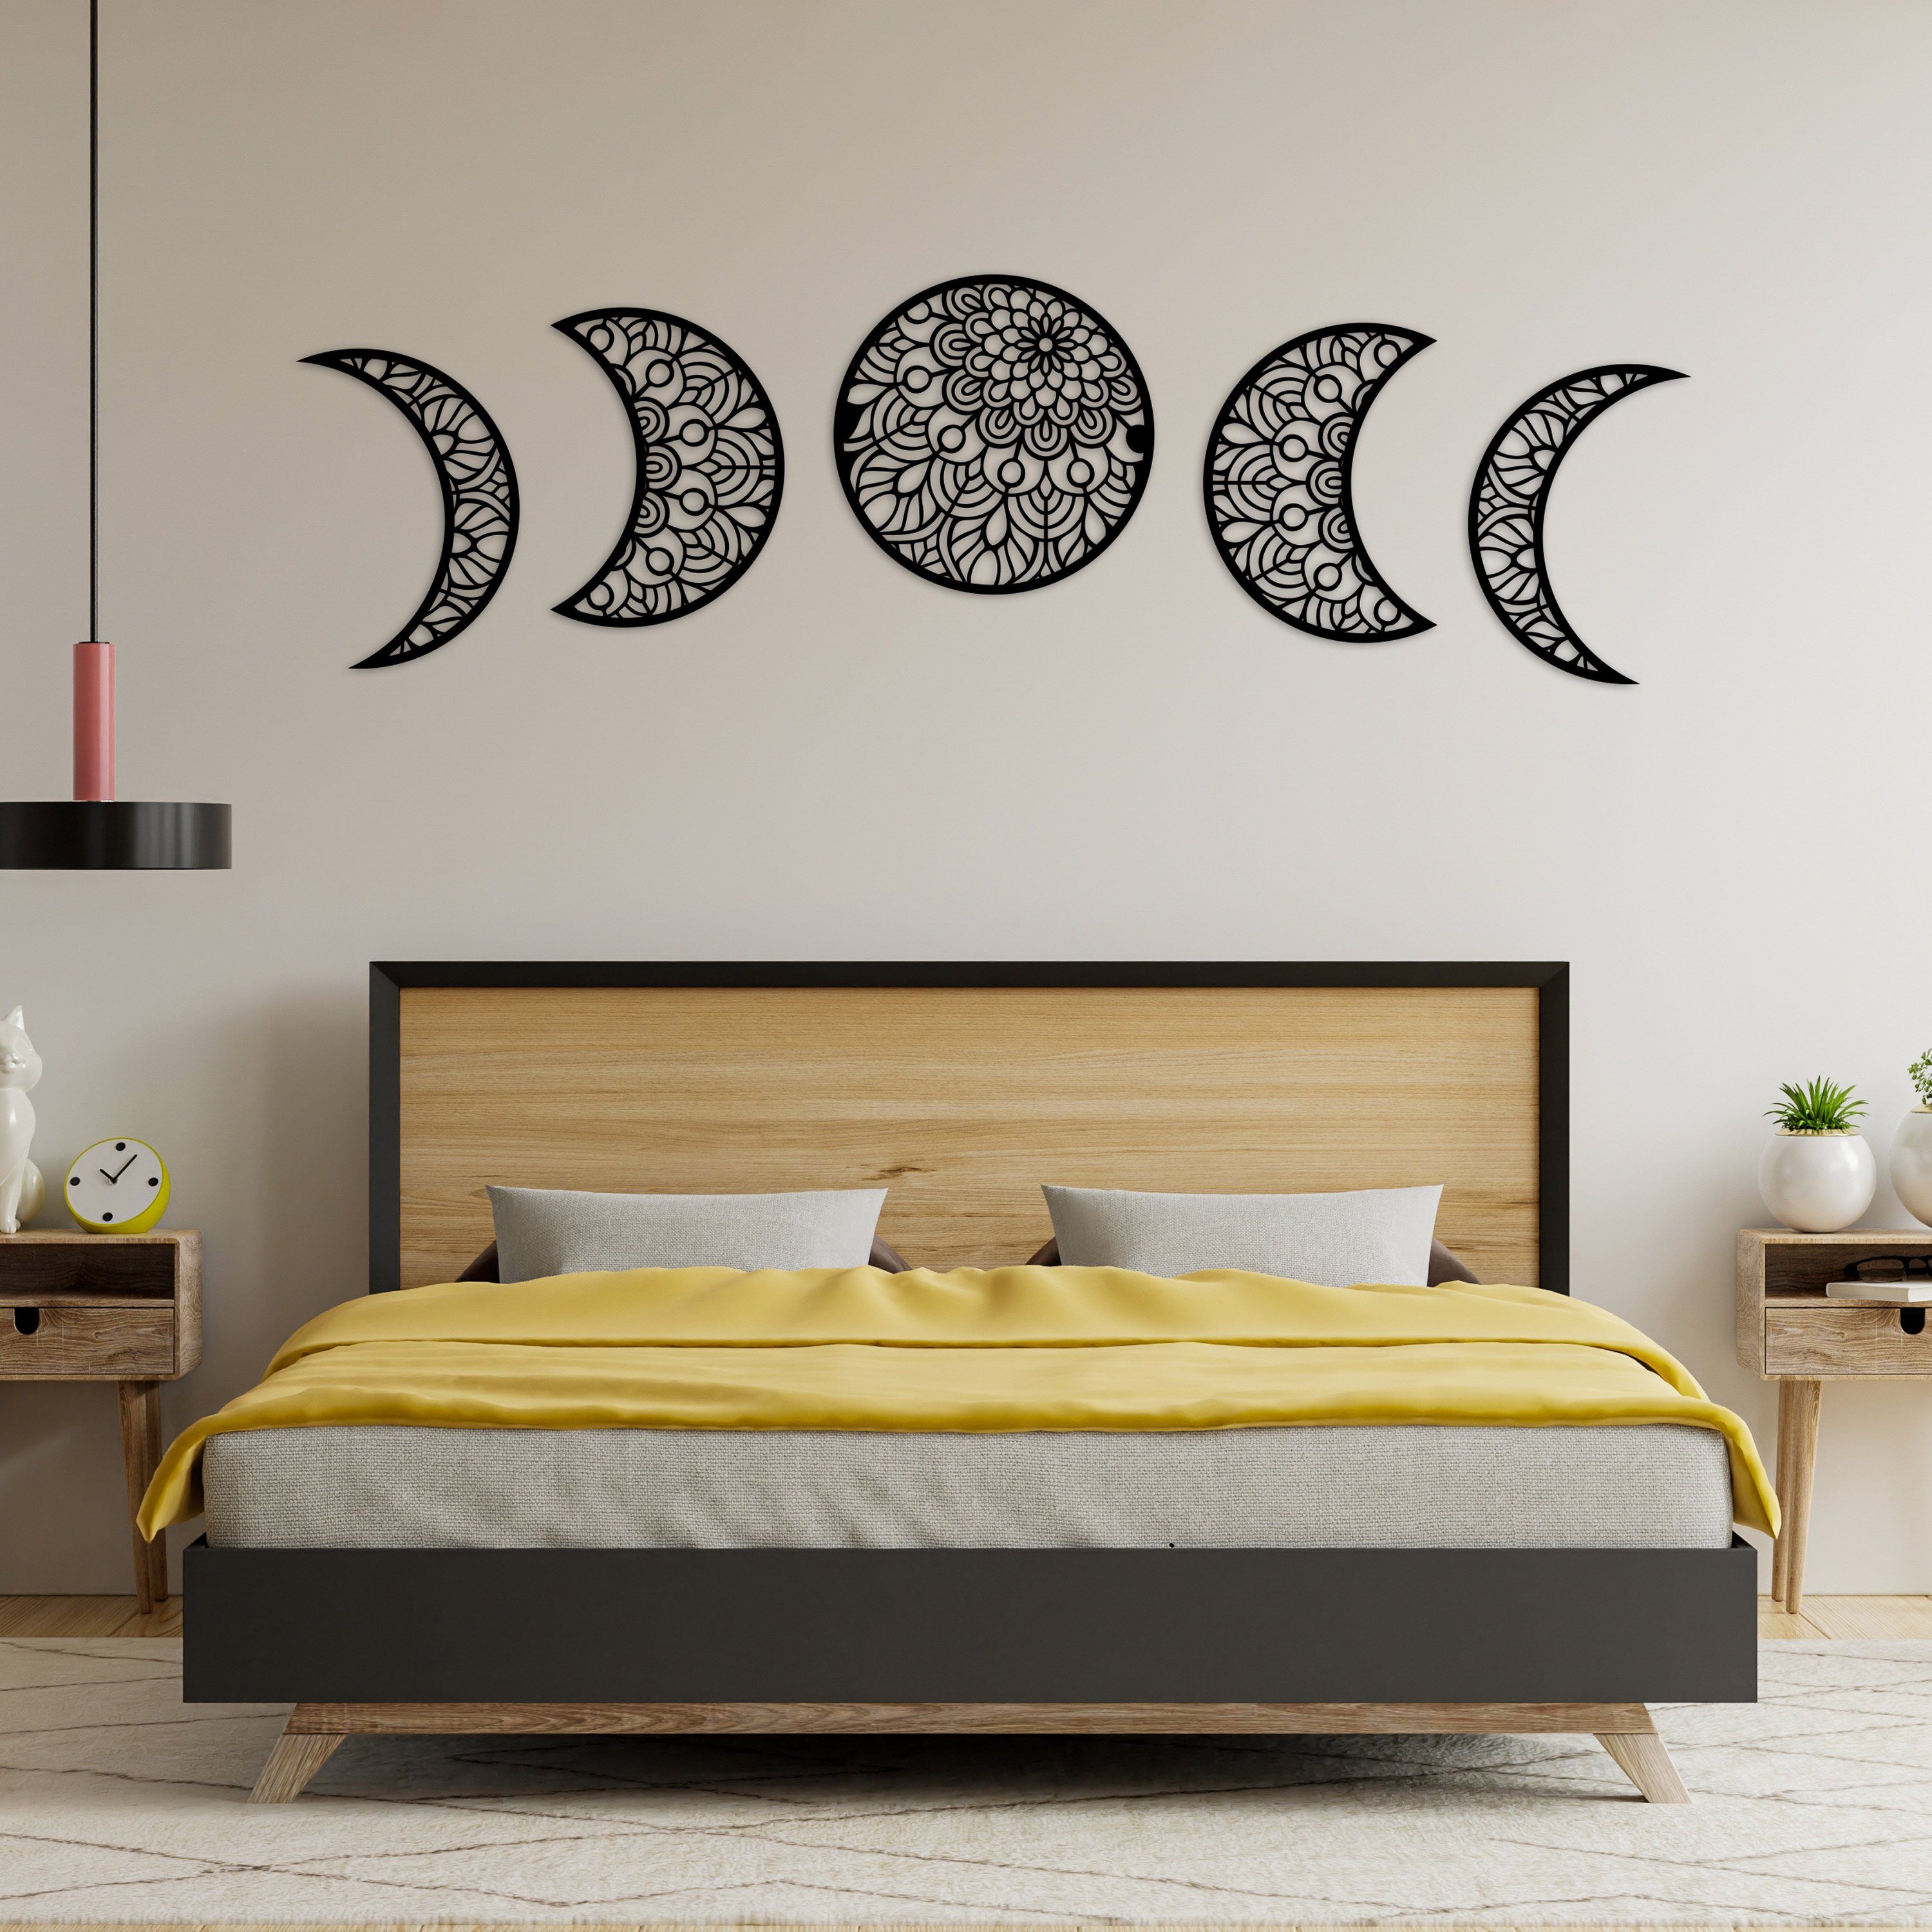 Namofactur Wanddekoobjekt Mondphasen Mandala Holz Wand Deko Wohnzimmer (5-teilig), Mond Wandtattoo Schlafzimmer